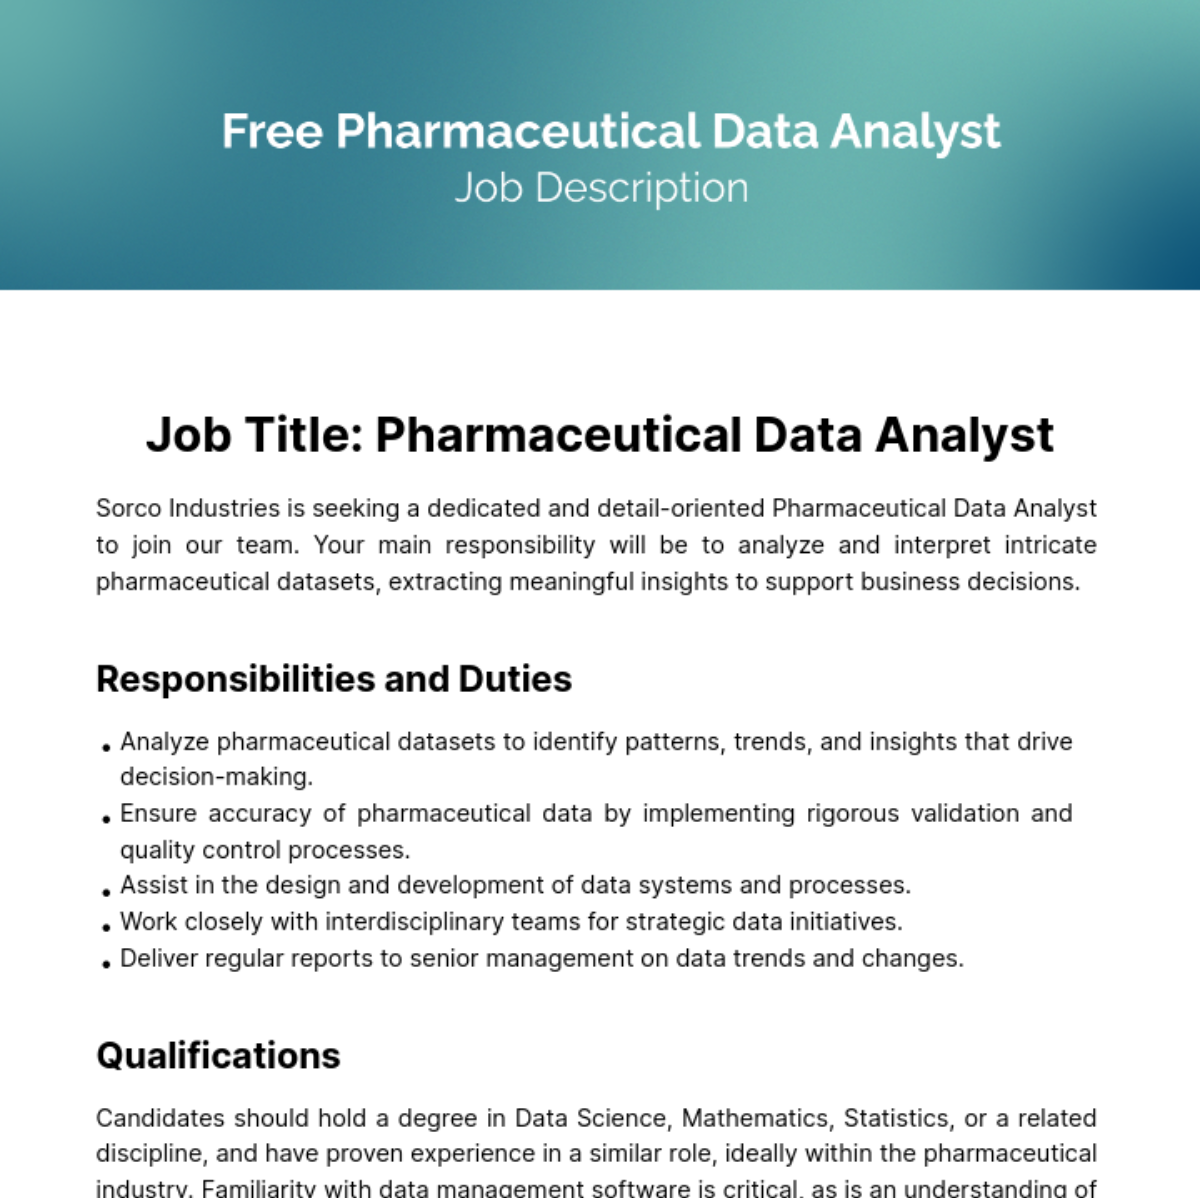 Free Pharmaceutical Data Analyst Job Description Template